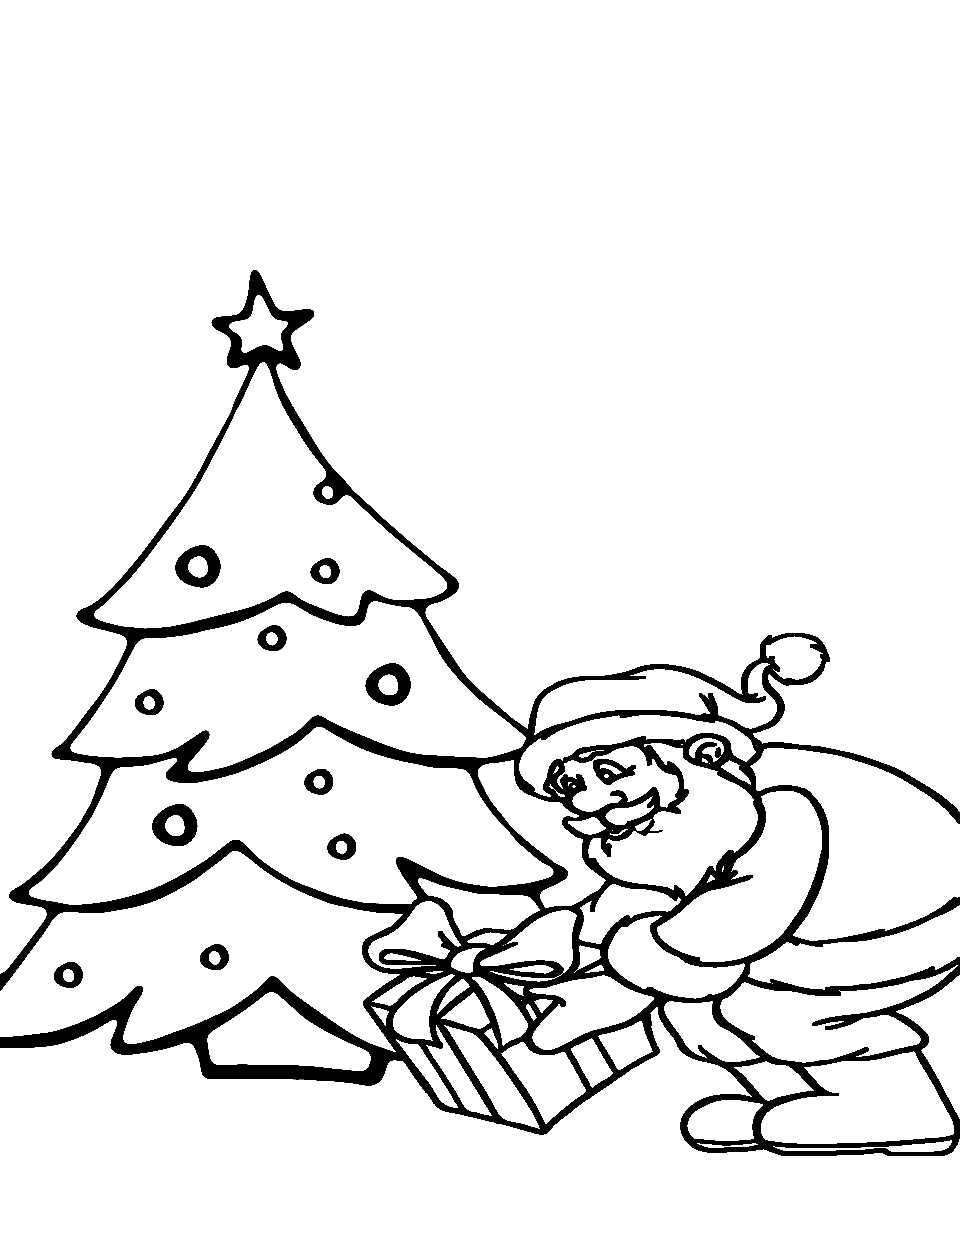 Santa Delivering Presents Coloring Page - Santa quietly placing gifts under a Christmas tree.